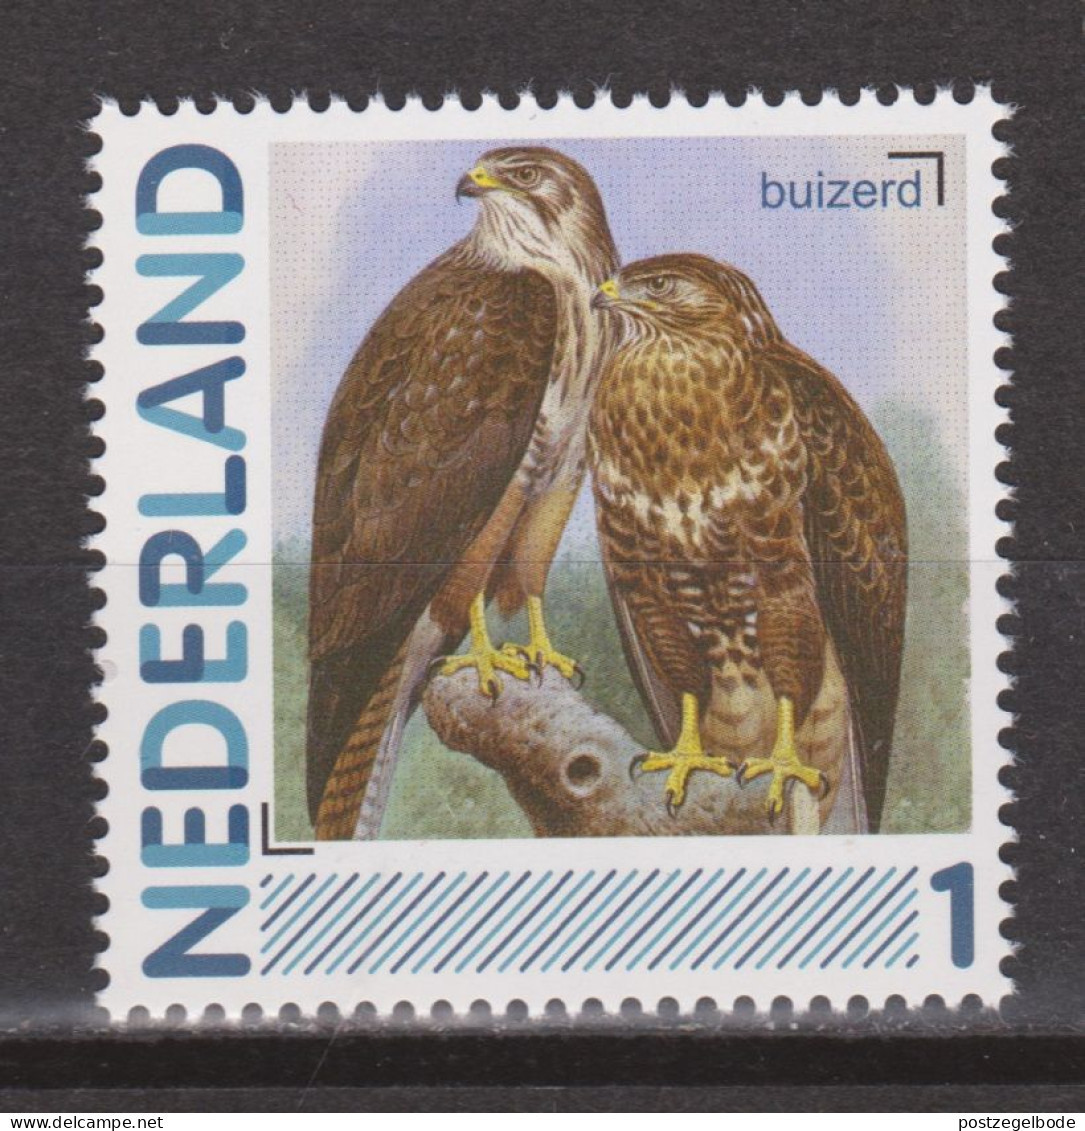 Nederland Netherlands Pays Bas MNH Roofvogel Oiseau De Proie Ave De Rapina Bird Of Prey Buizerd Buzzard Buse Ratonero - Águilas & Aves De Presa